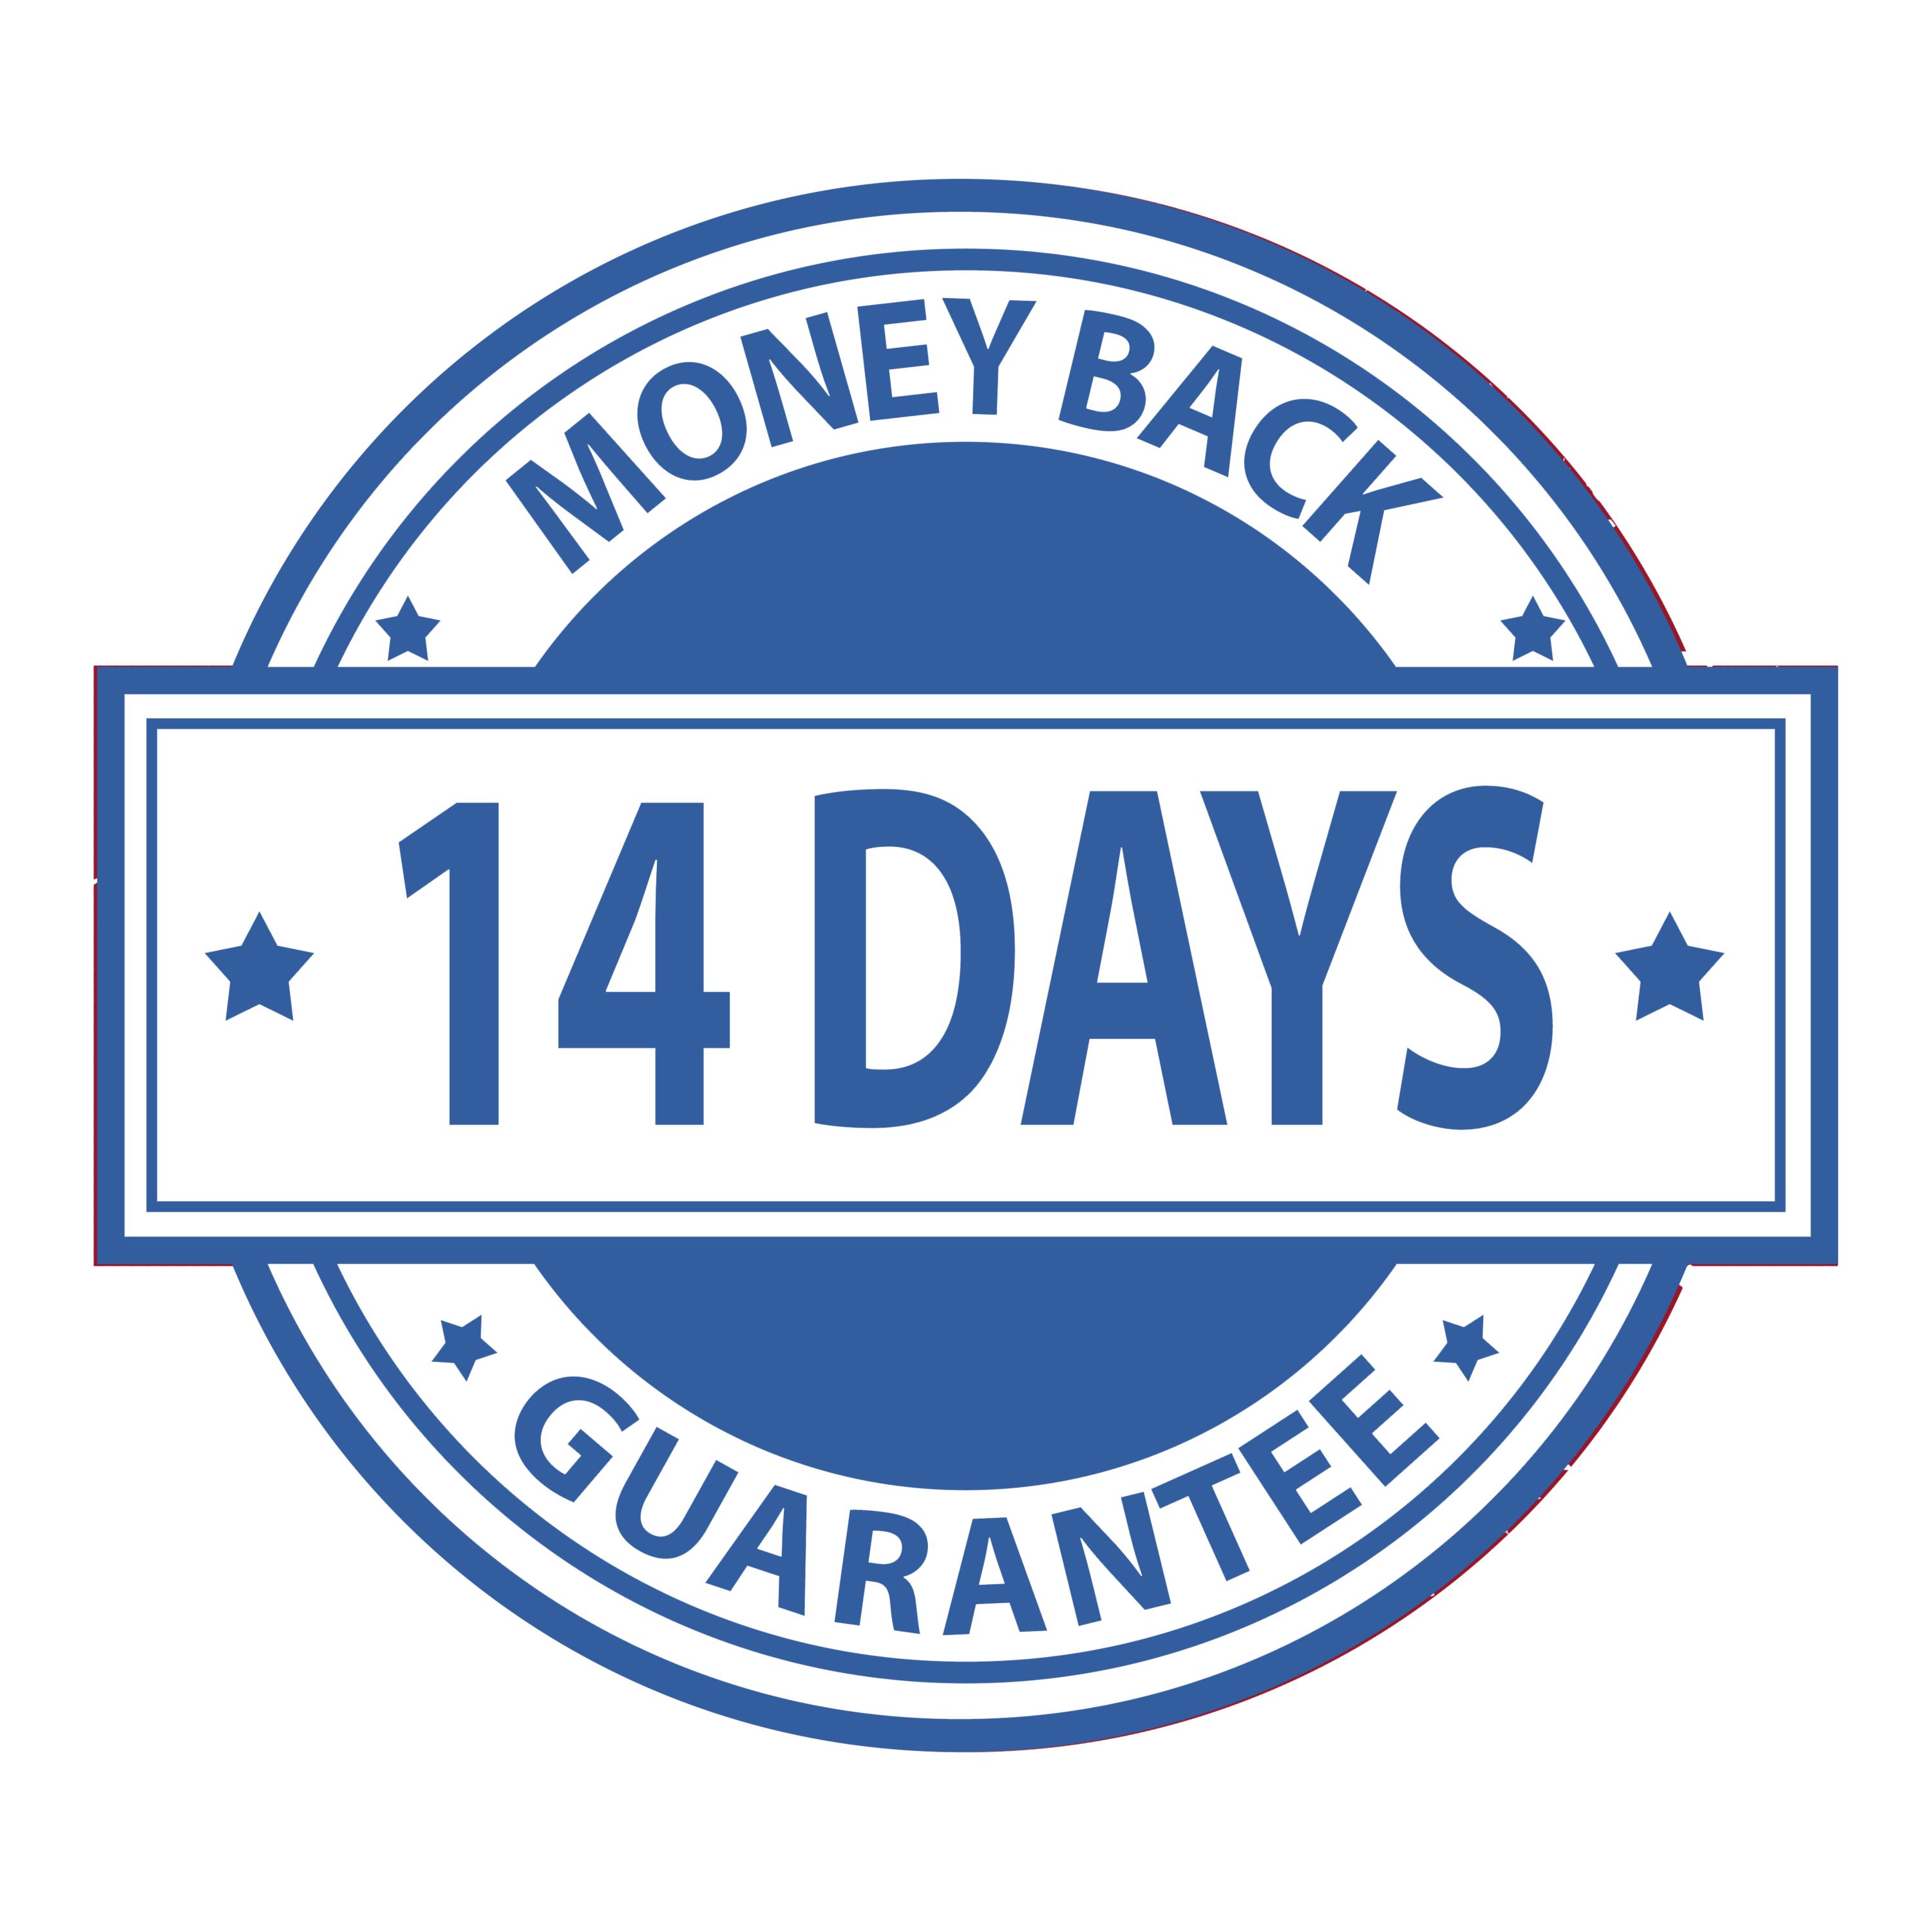 14 Days Money Back Guarantee PNG Free Image